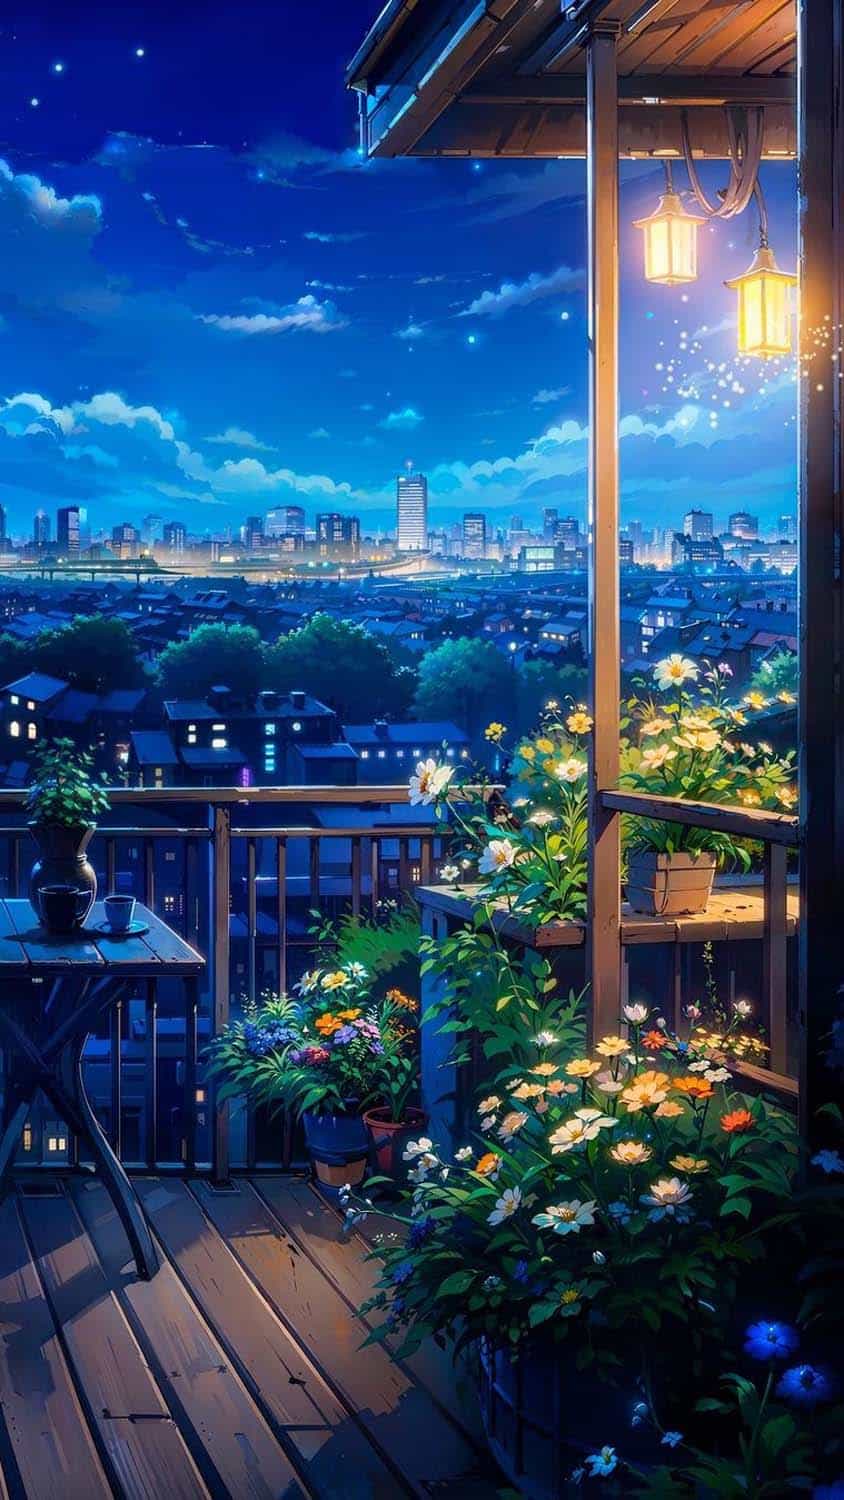 Evening Balcony City View iPhone Wallpaper 4K